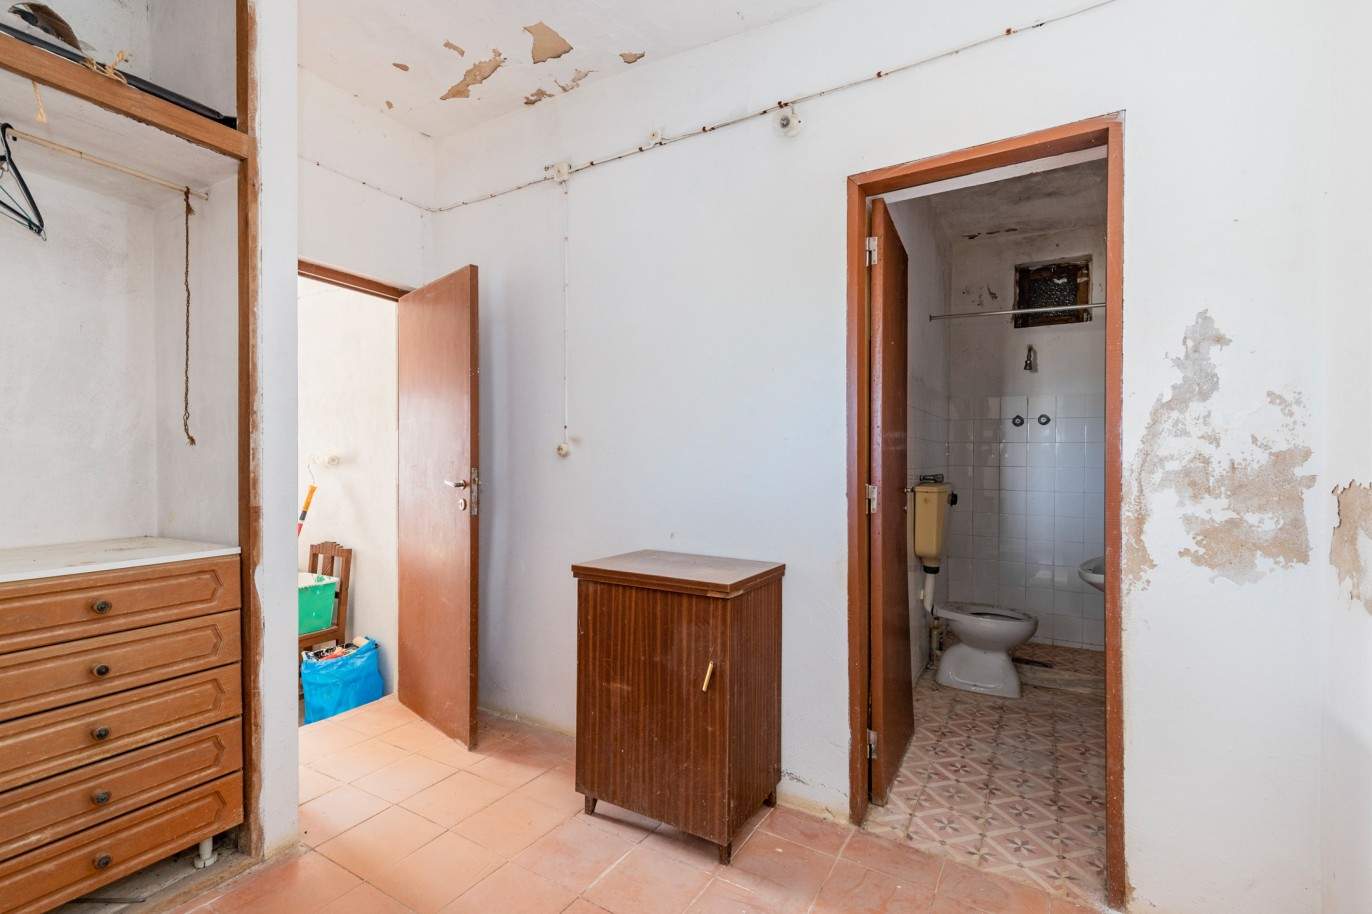 Property to remodel, for sale in Falfeira, Lagos, Algarve_210377